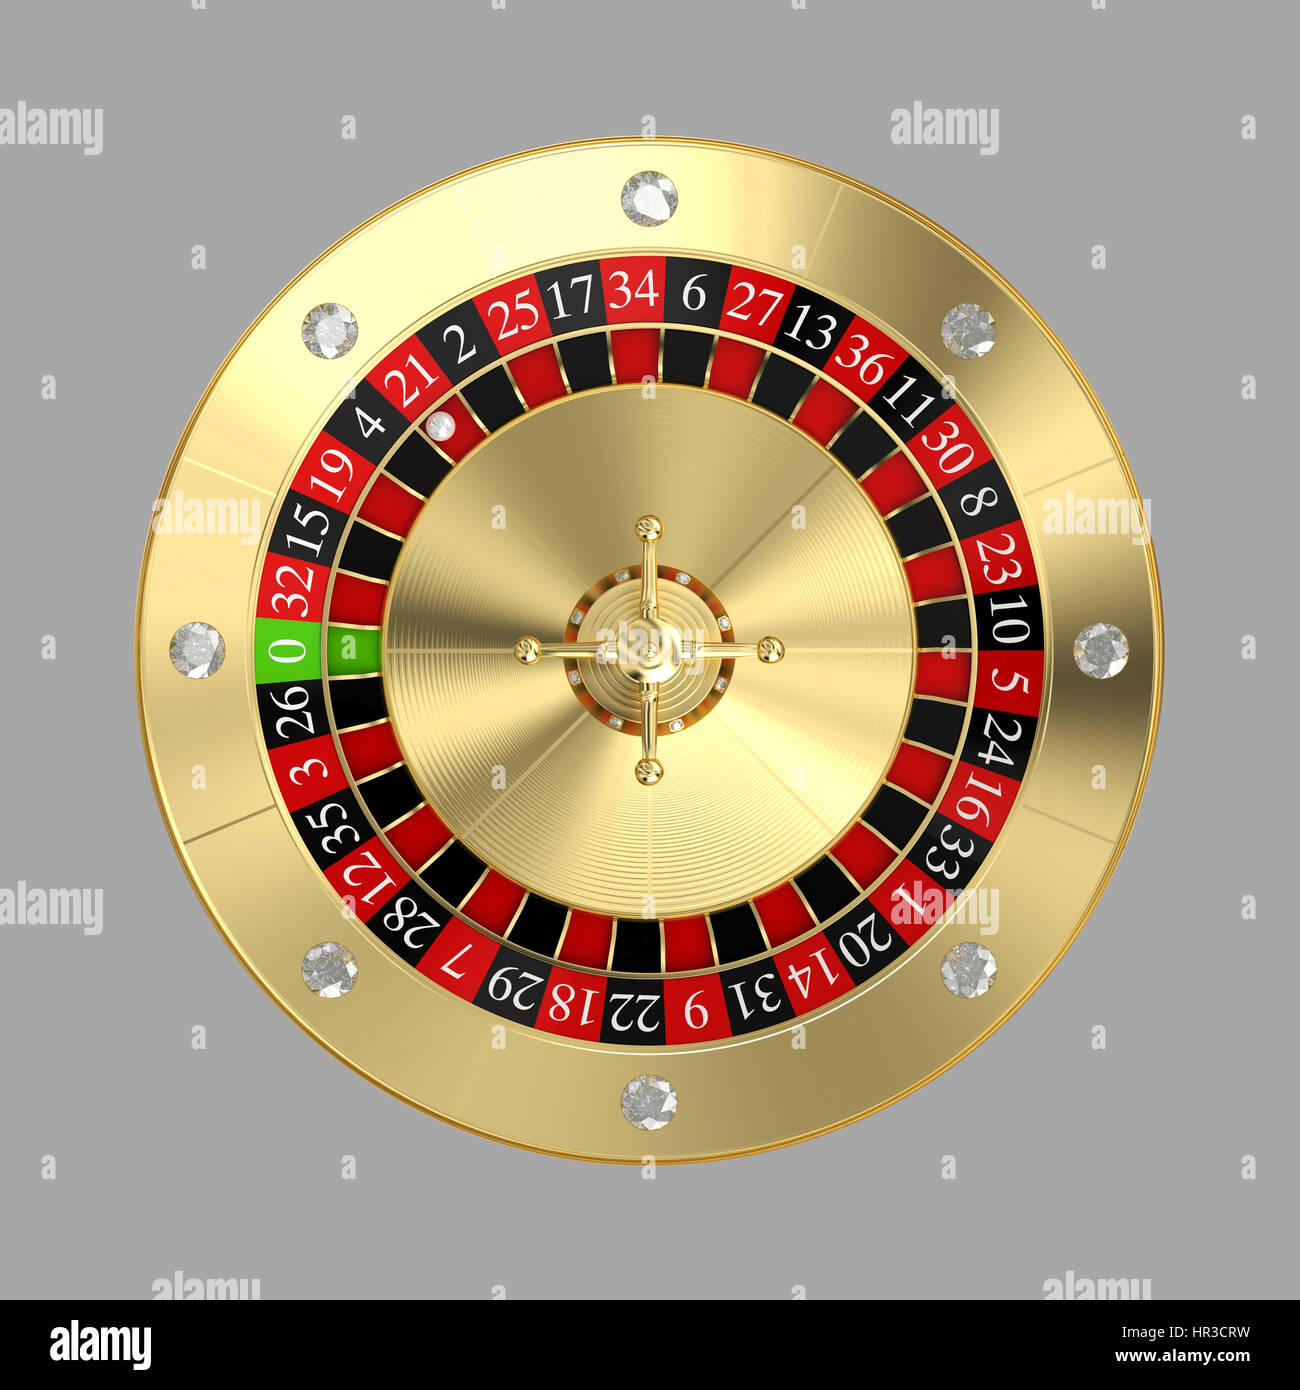 golden roulette casino 3d rendering image Stock Photo